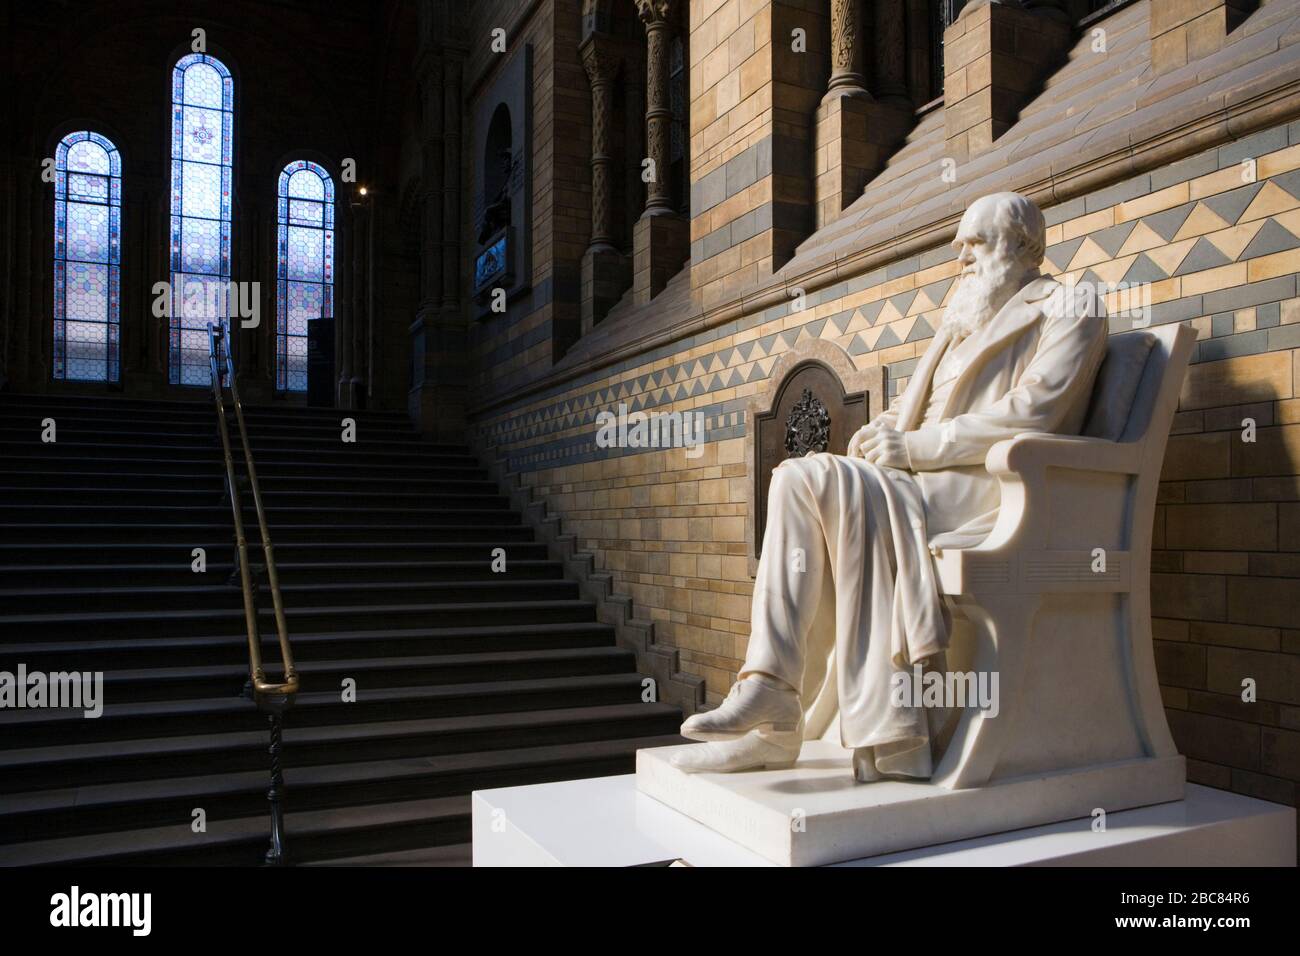 Statue of Charles Darwin in Natural History Museum, London, UK Stock Photo